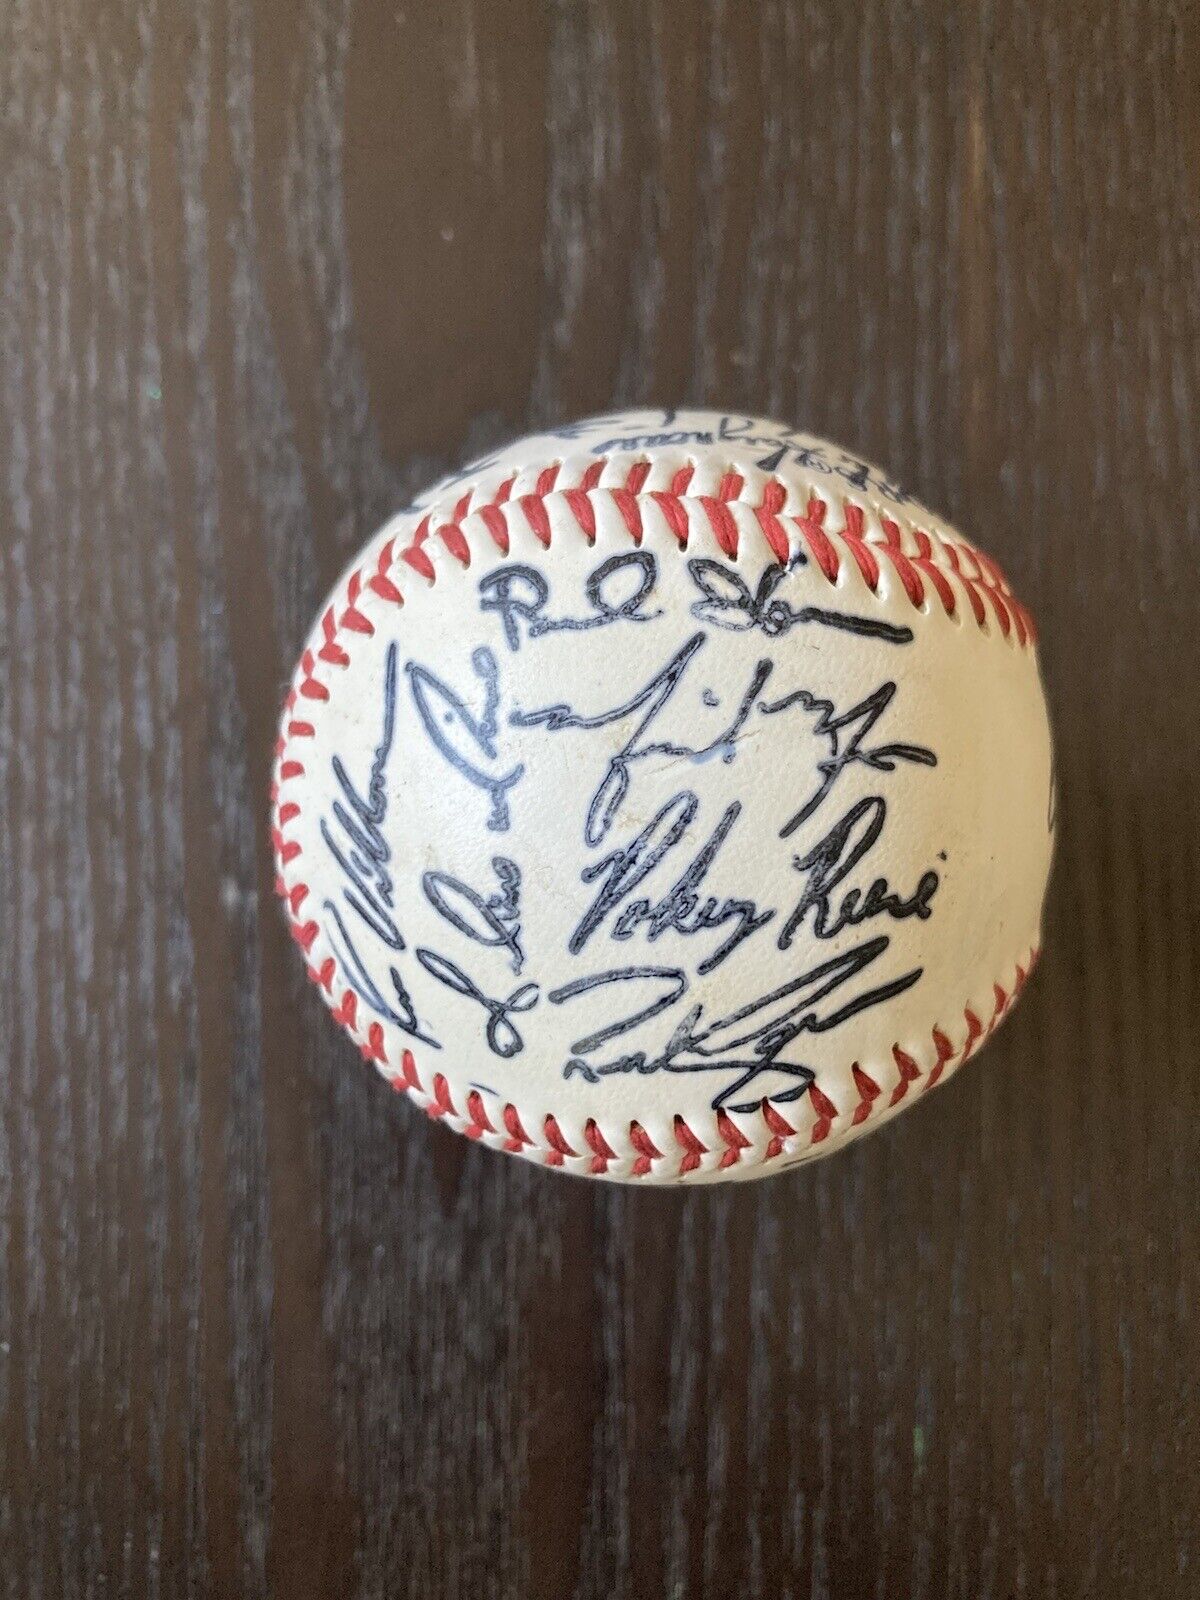 2005 Seattle Mariners Autographed Baseball